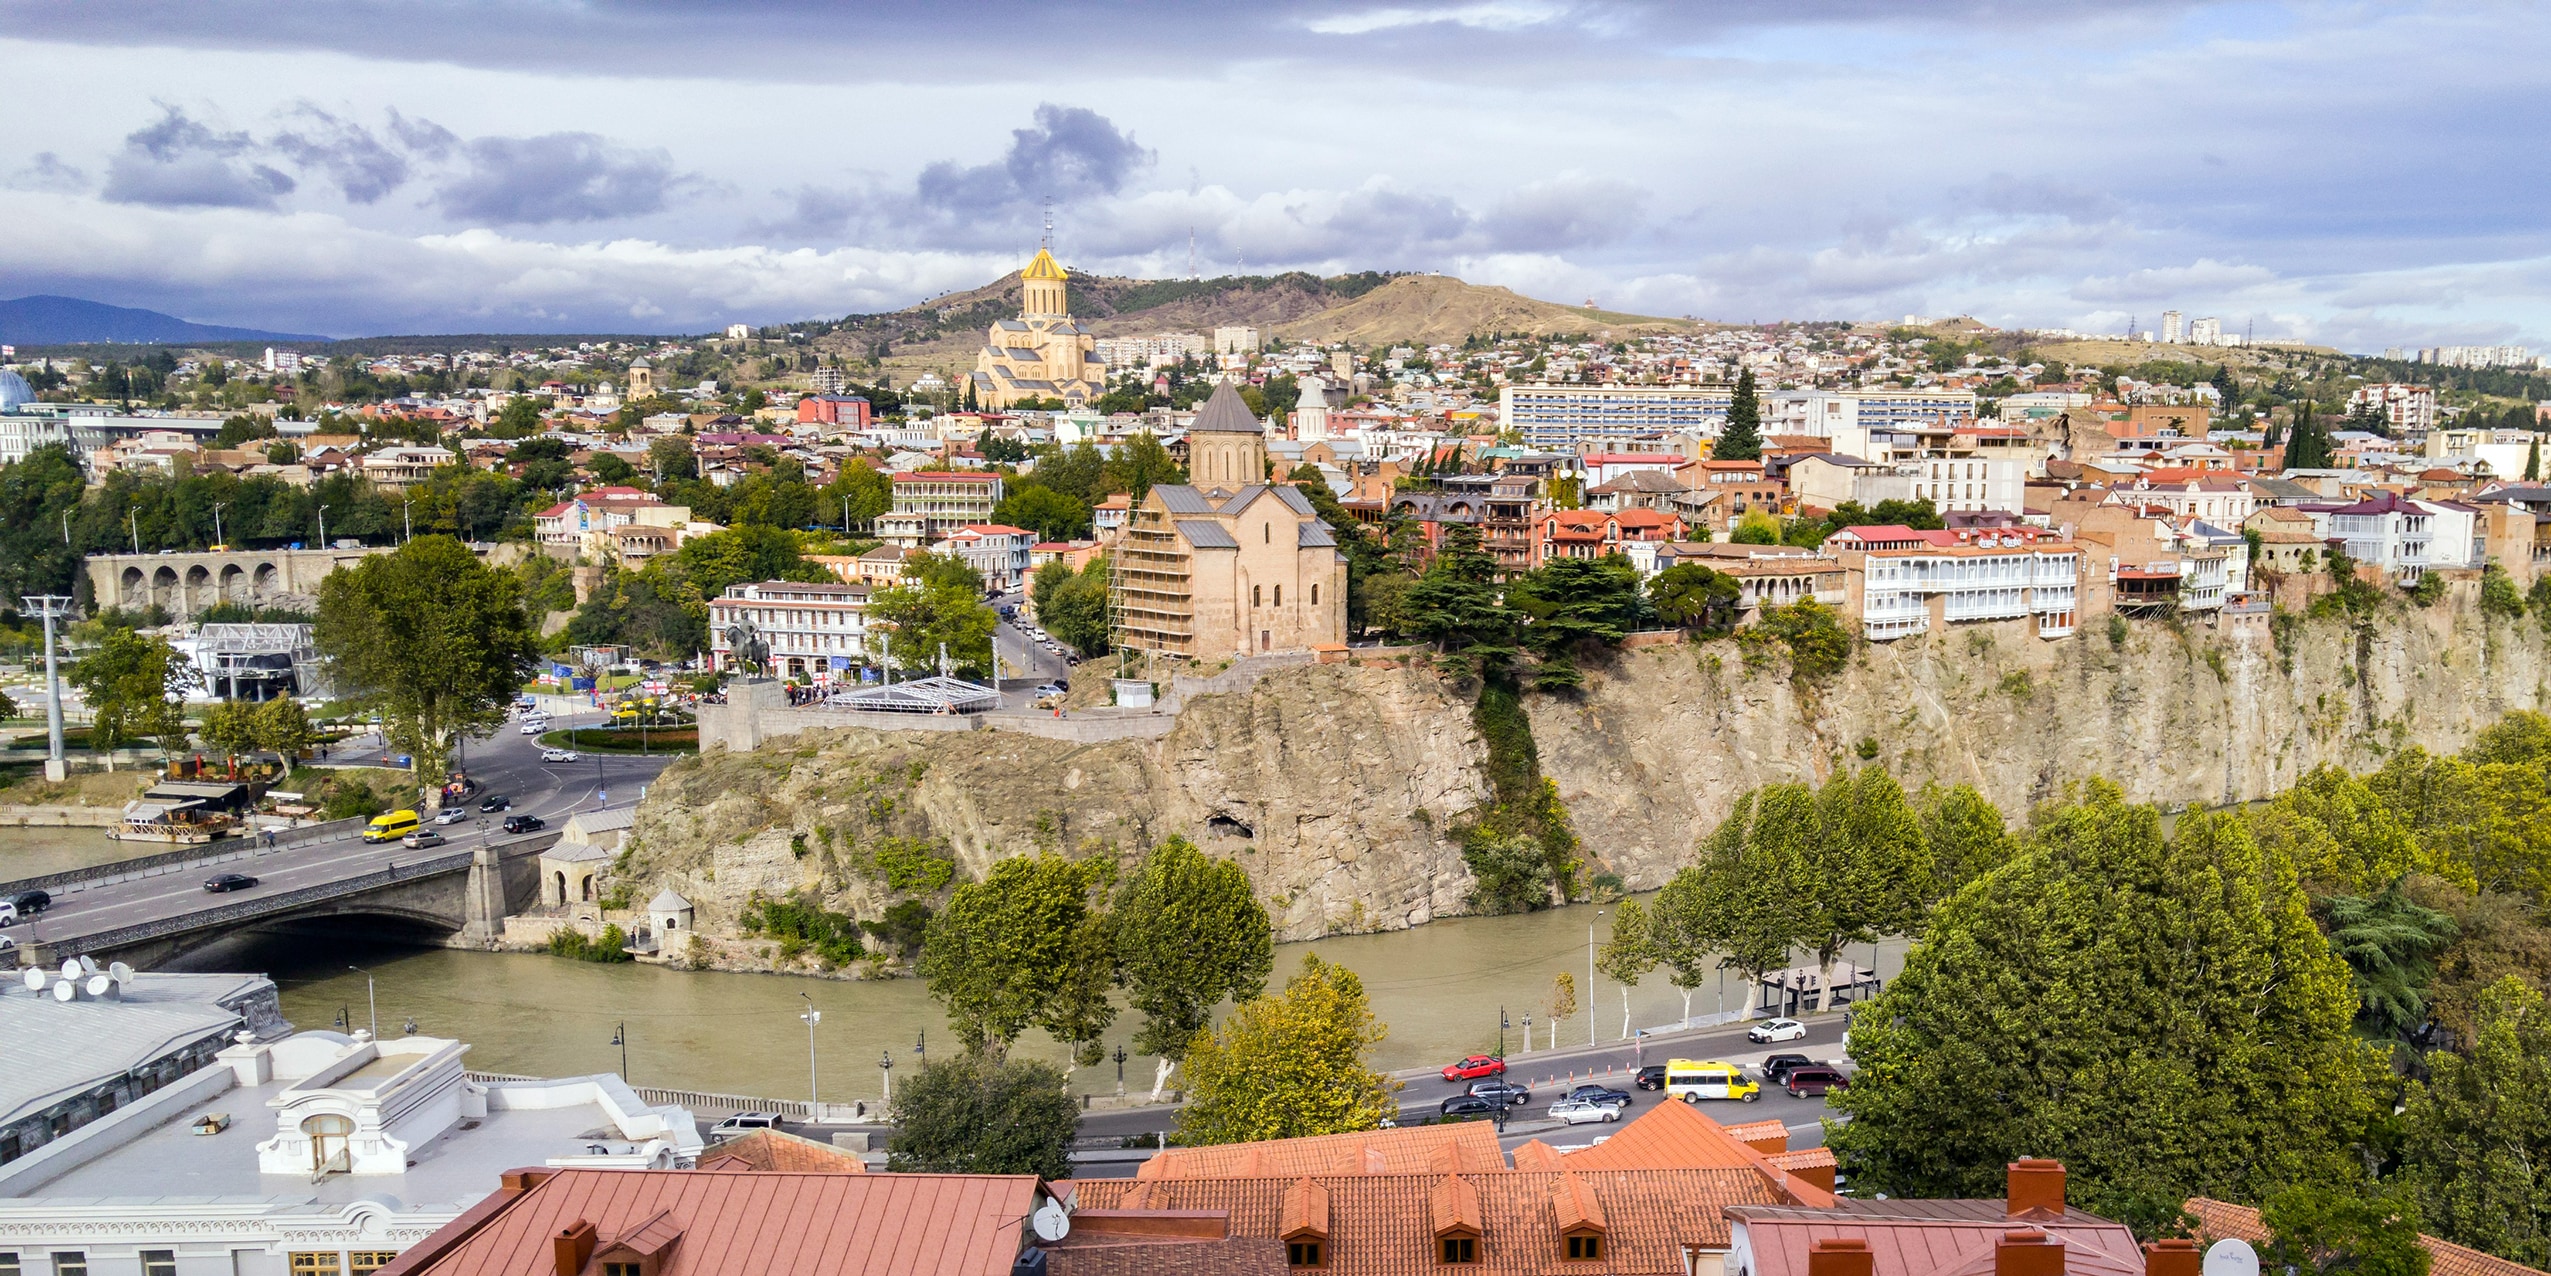 Stedentrip naar Tbilisi